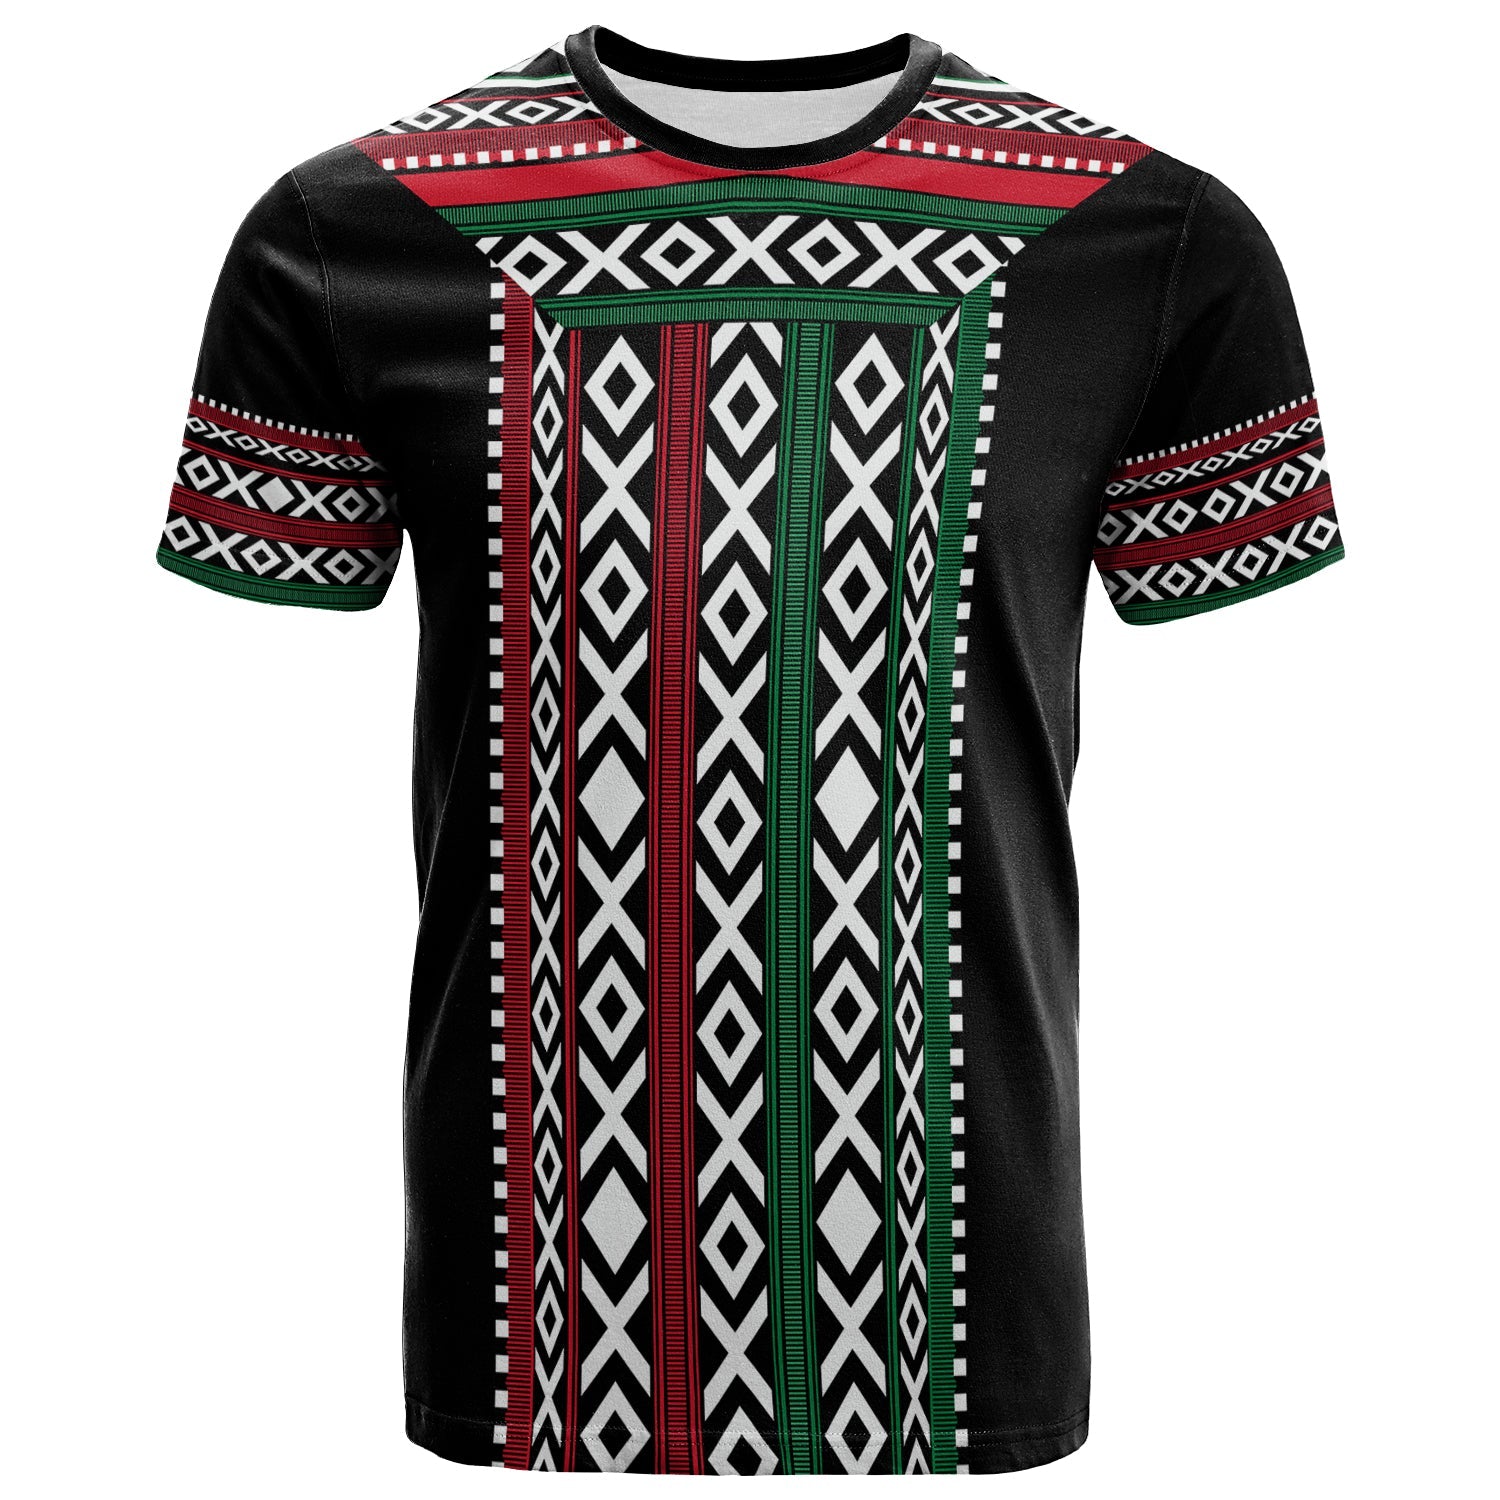 kuwait-al-sadu-pattern-t-shirt-modern-style